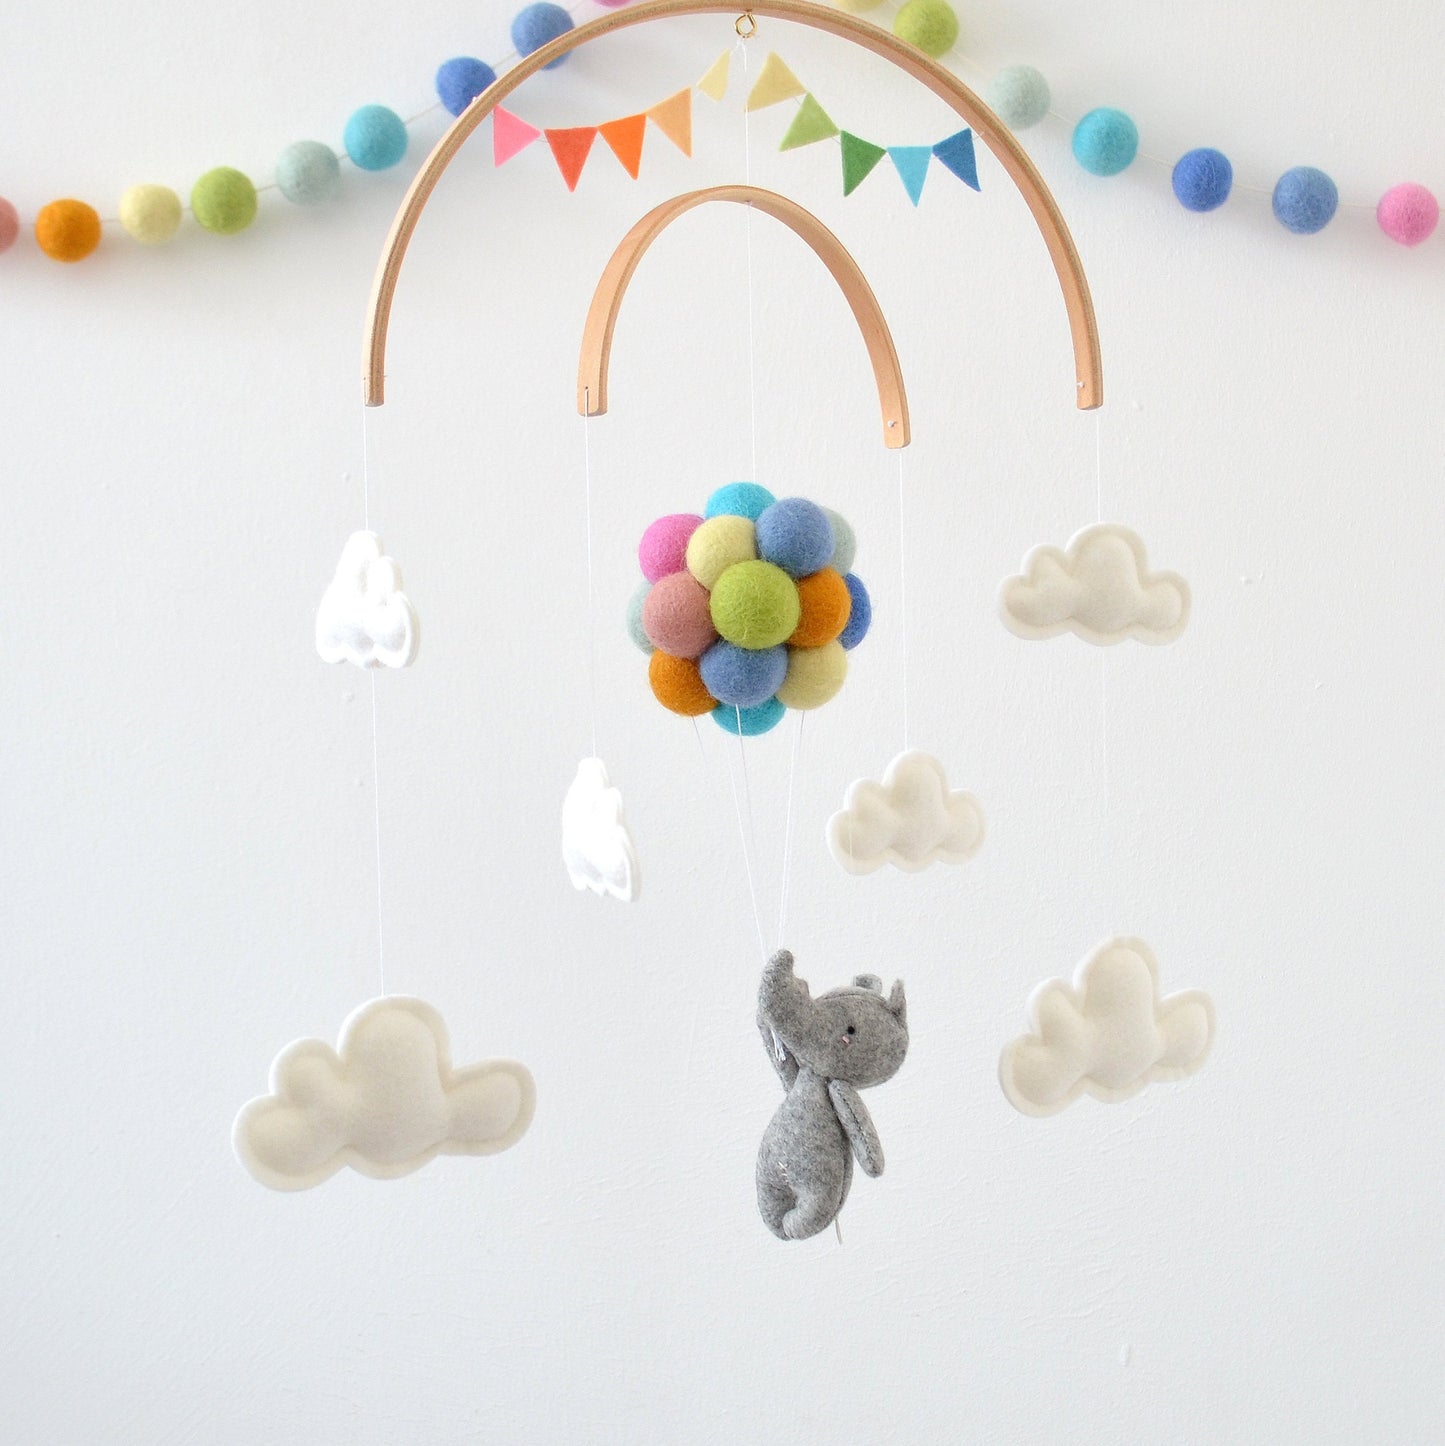 Rhino Flying with rainbow balloons